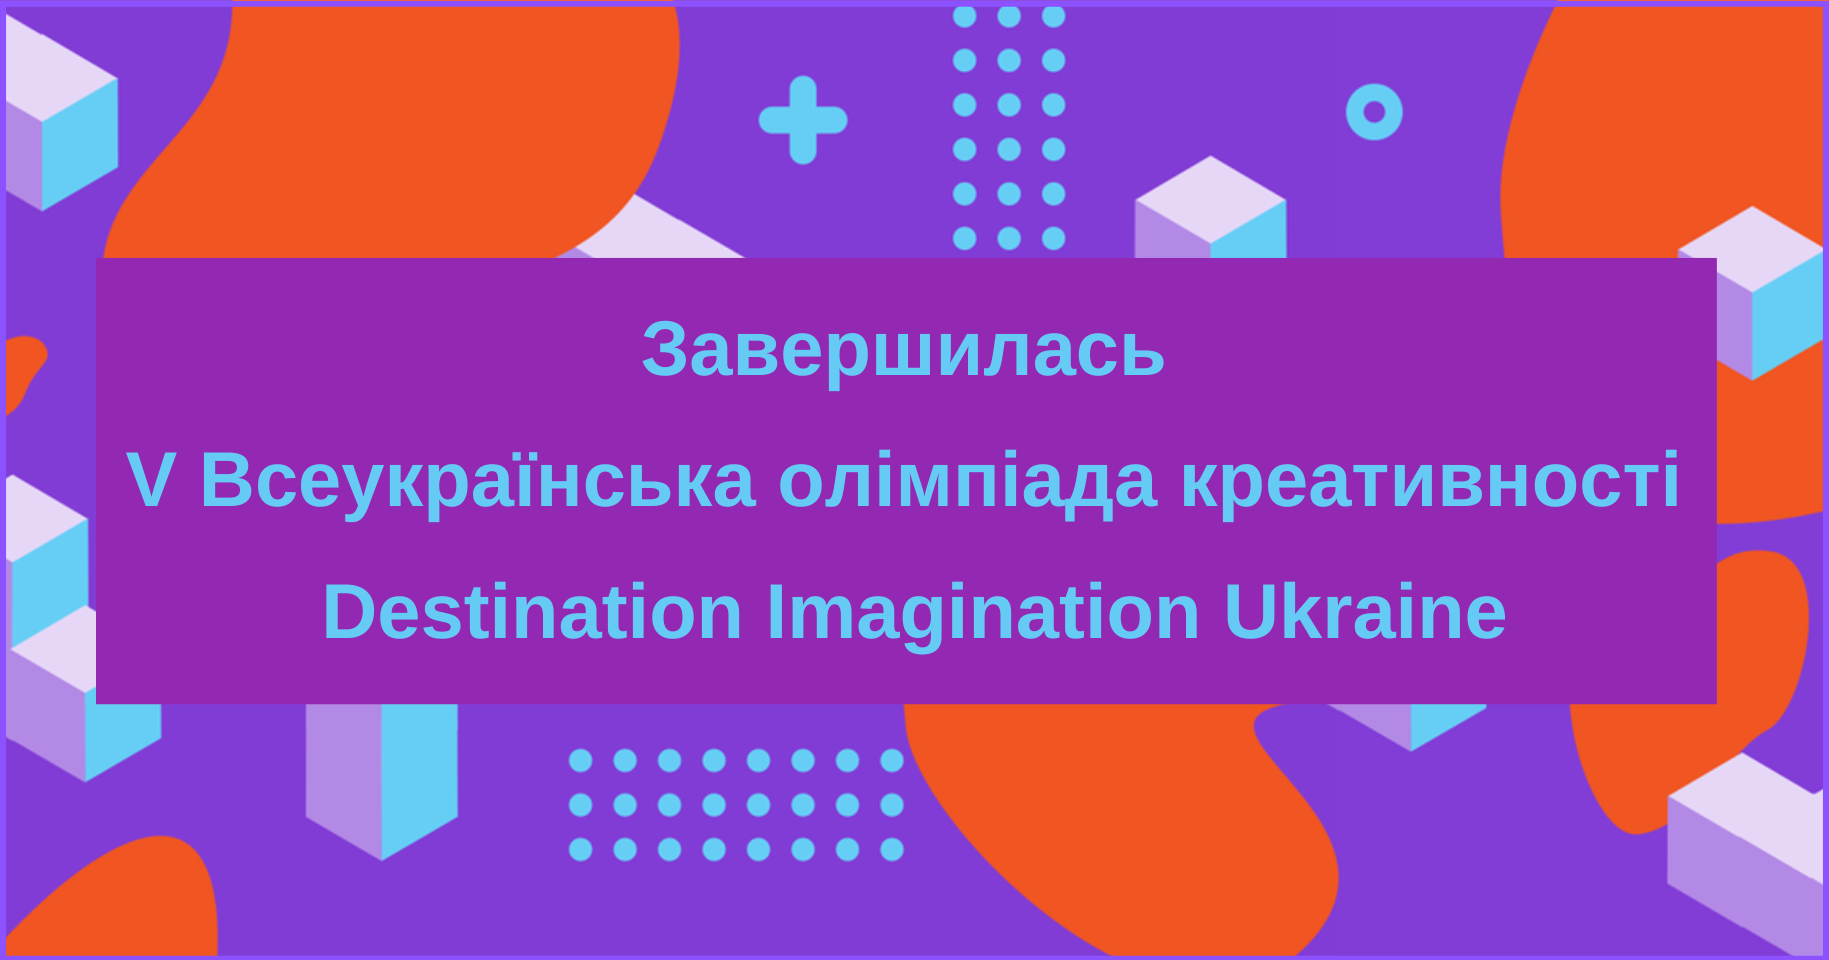 Завершилась V Всеукраїнська олімпіада креативності Destination Imagination Ukraine